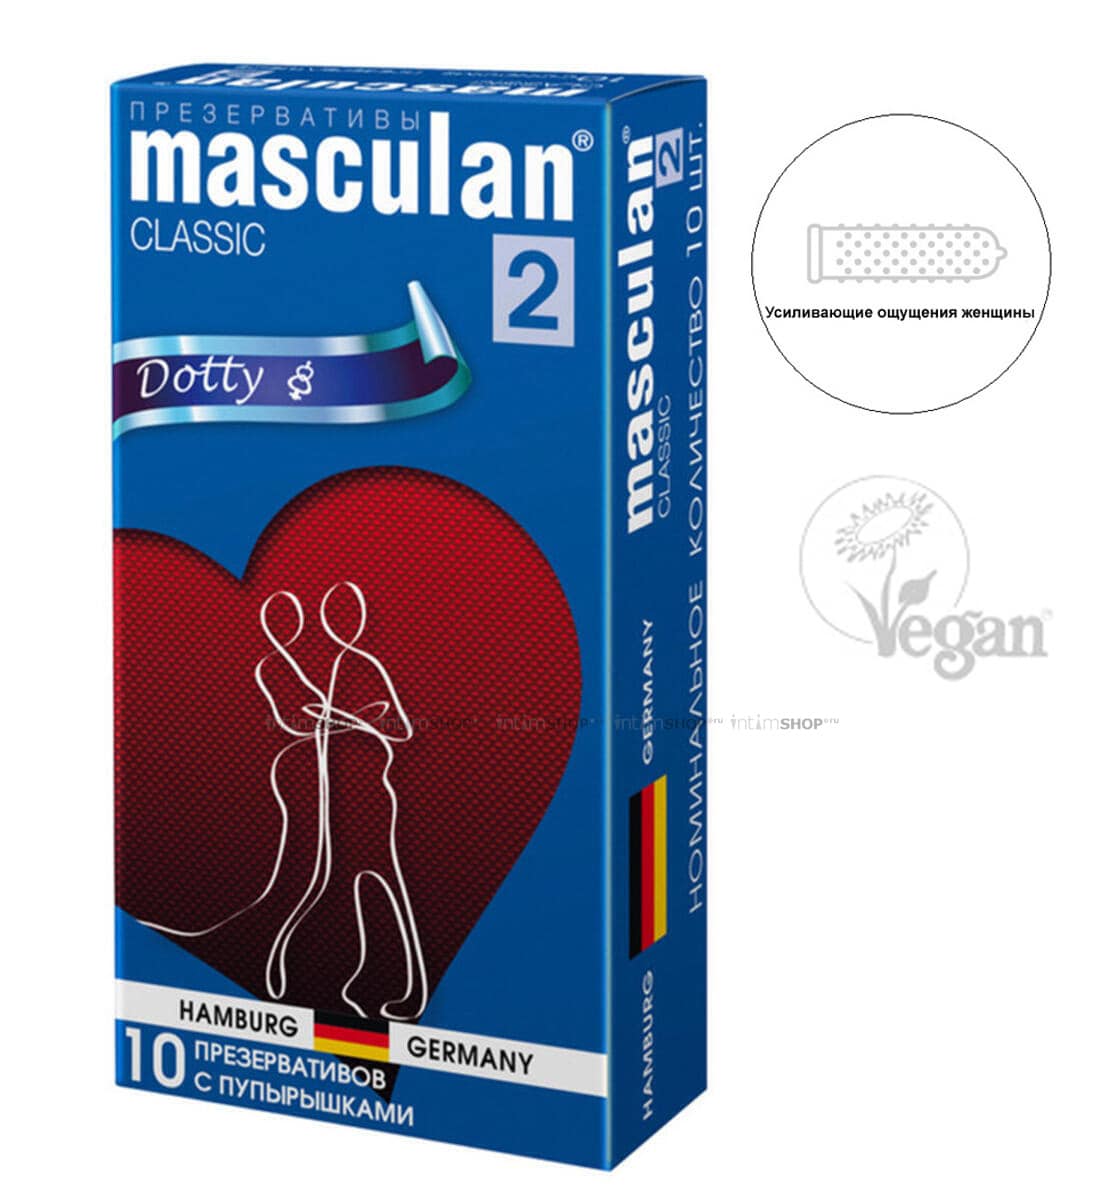 Презервативы с пупырышками Masculan Classic Dotty, 10 шт